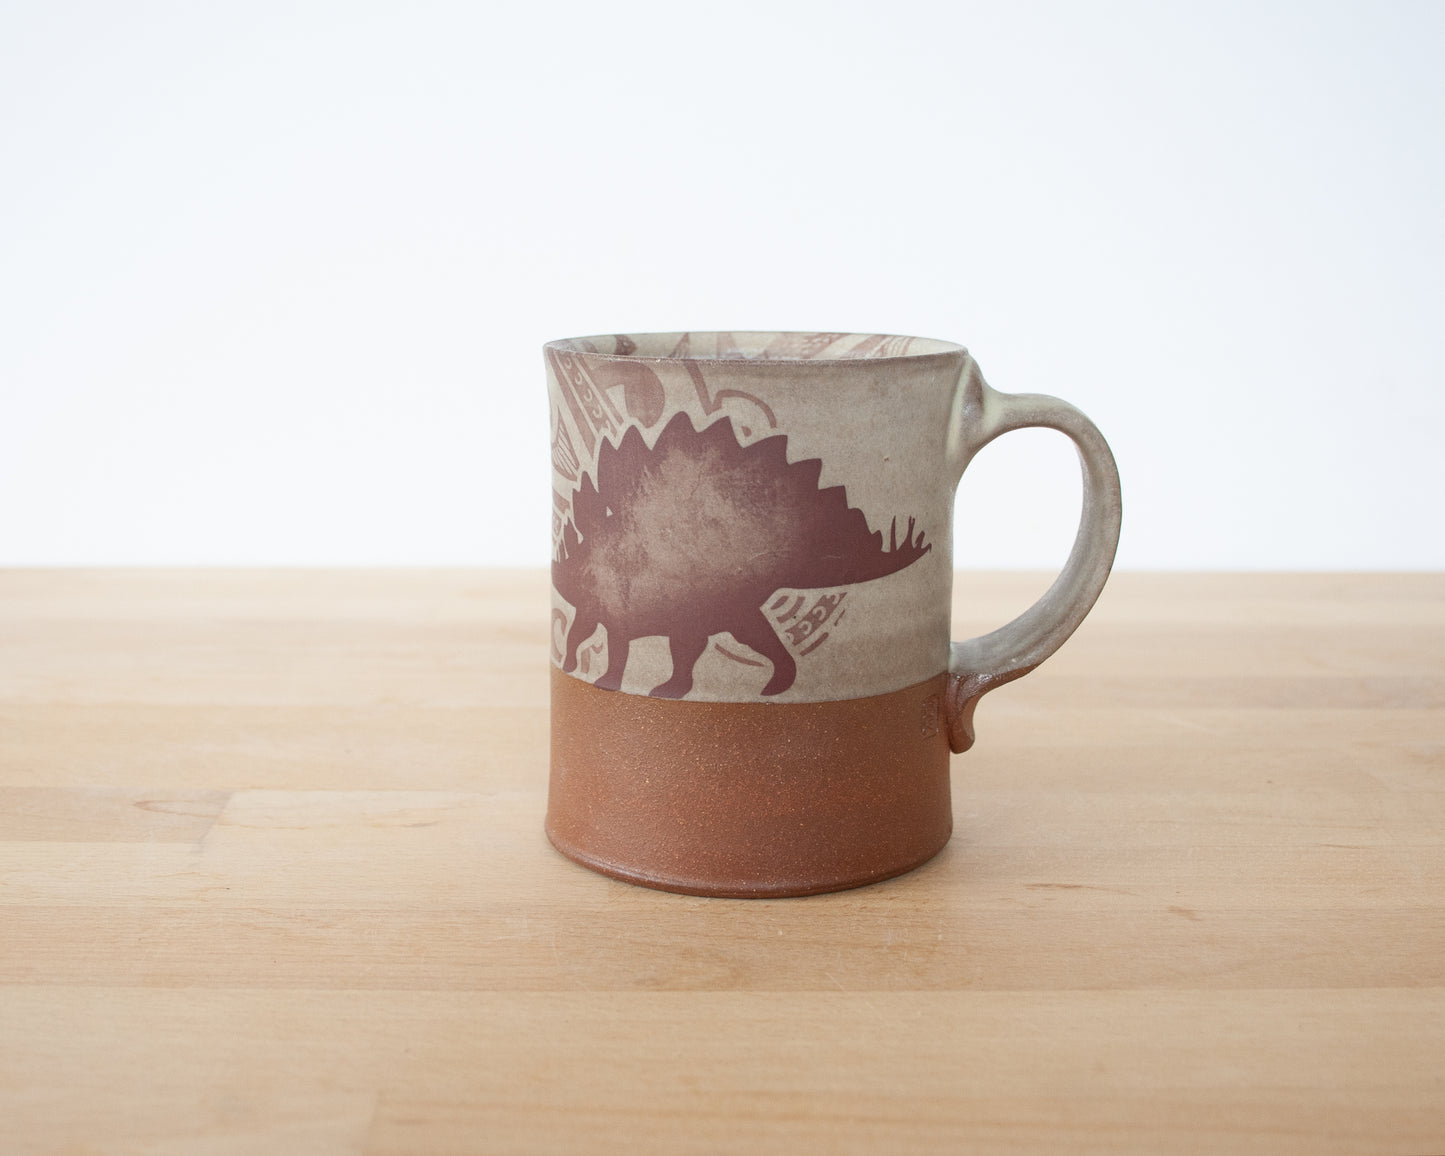 Stegosaurus Mug with pattern - matte grey